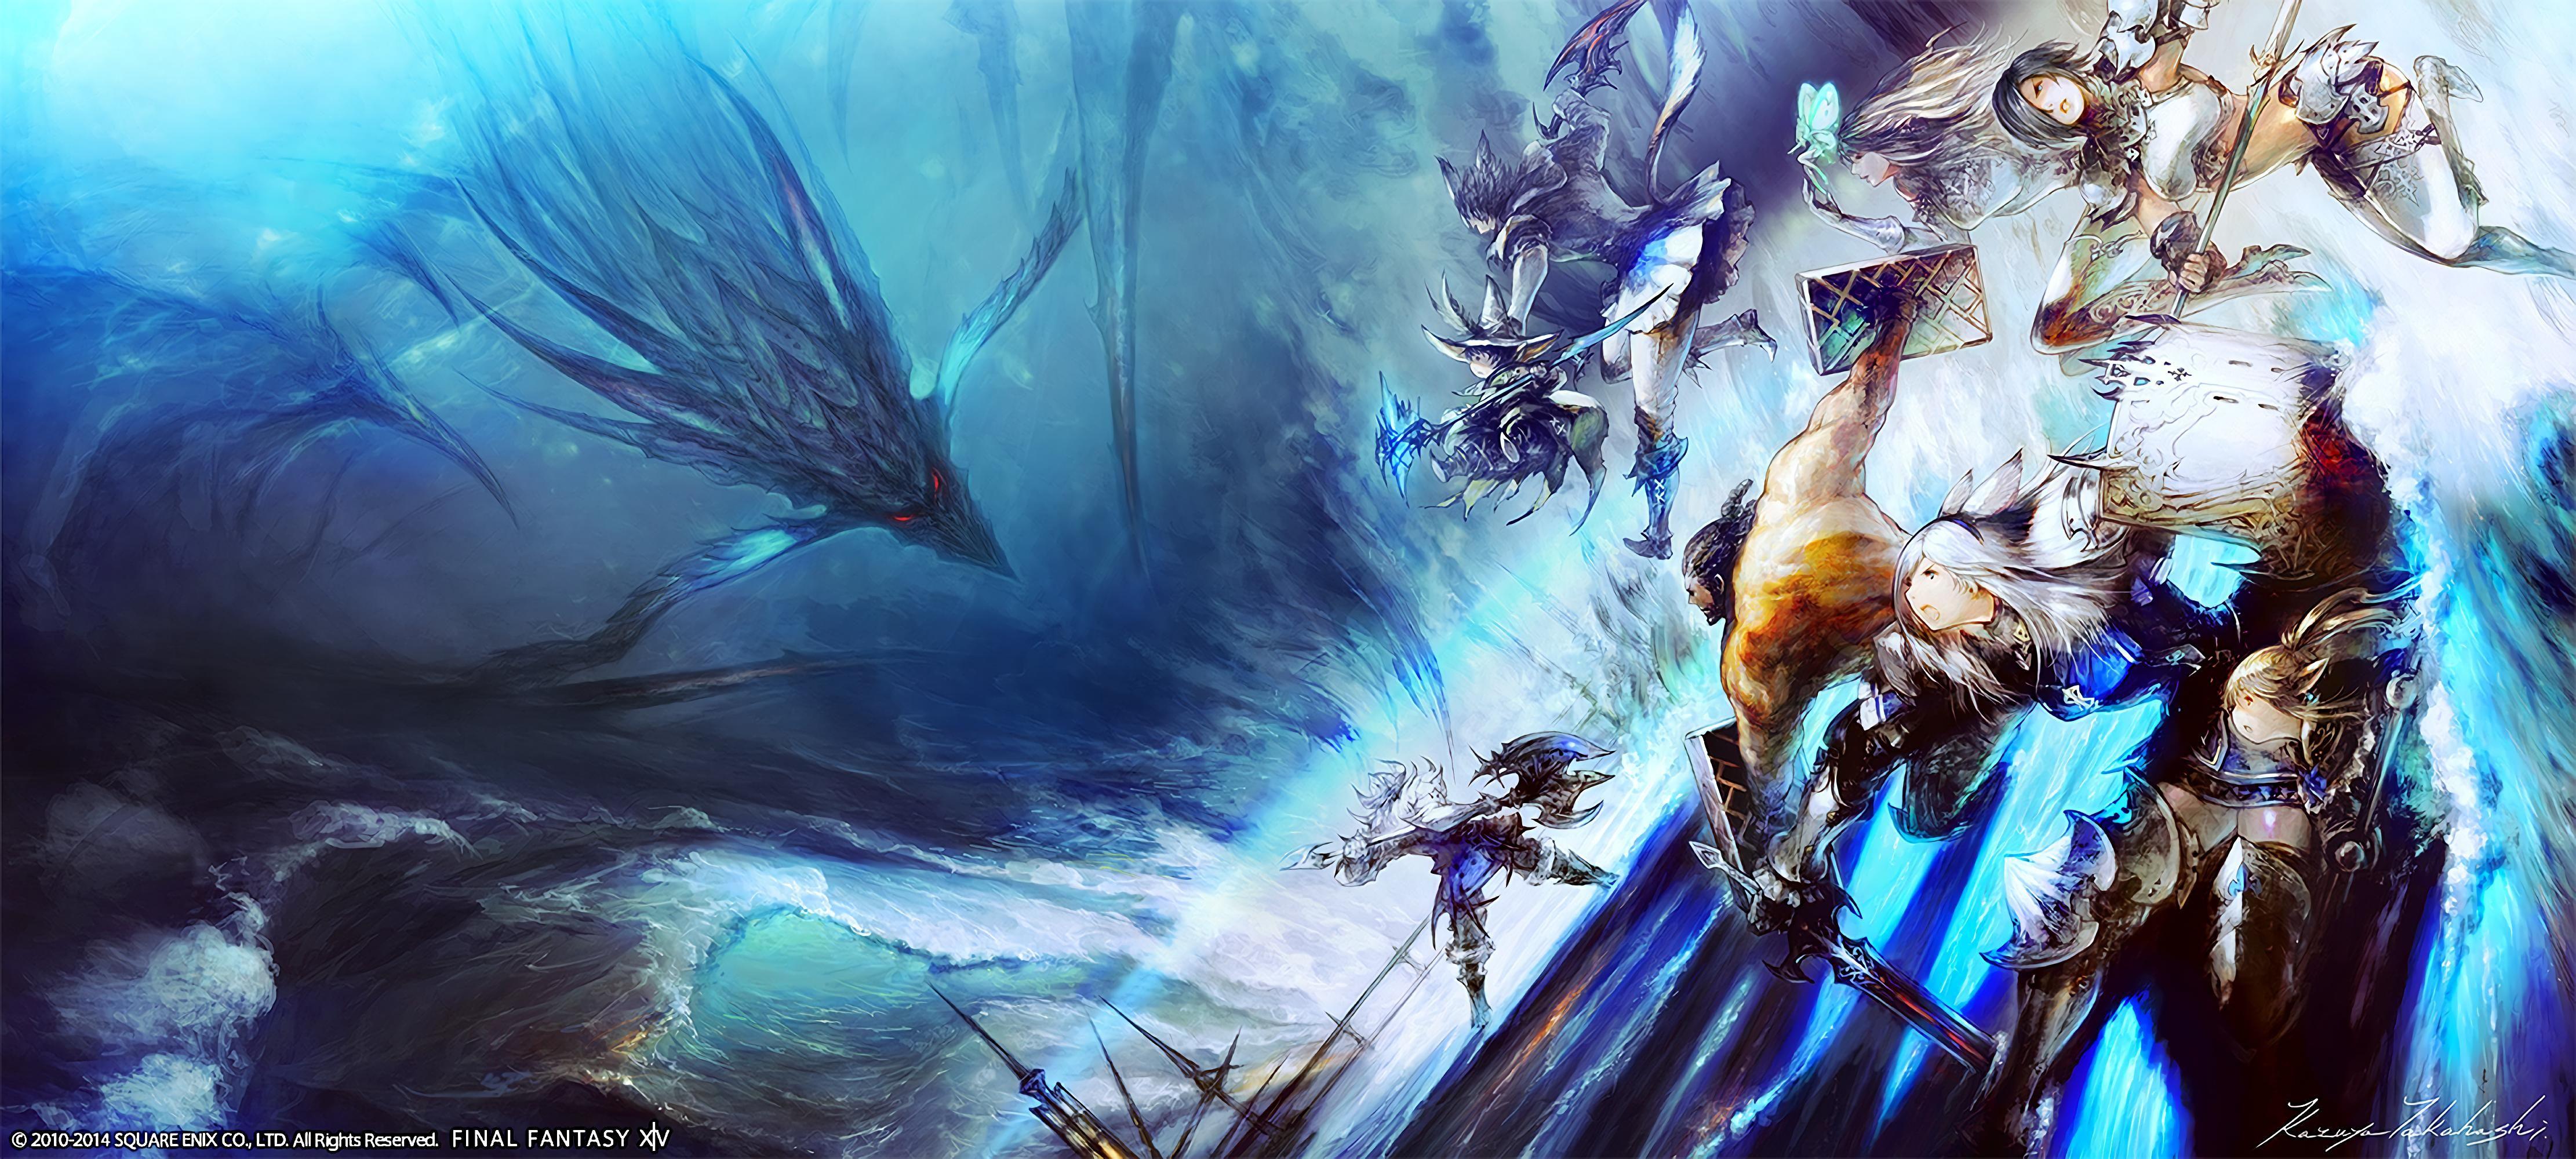 4444 x 2000 · jpeg - Final Fantasy XIV: Stormblood Wallpapers - Wallpaper Cave